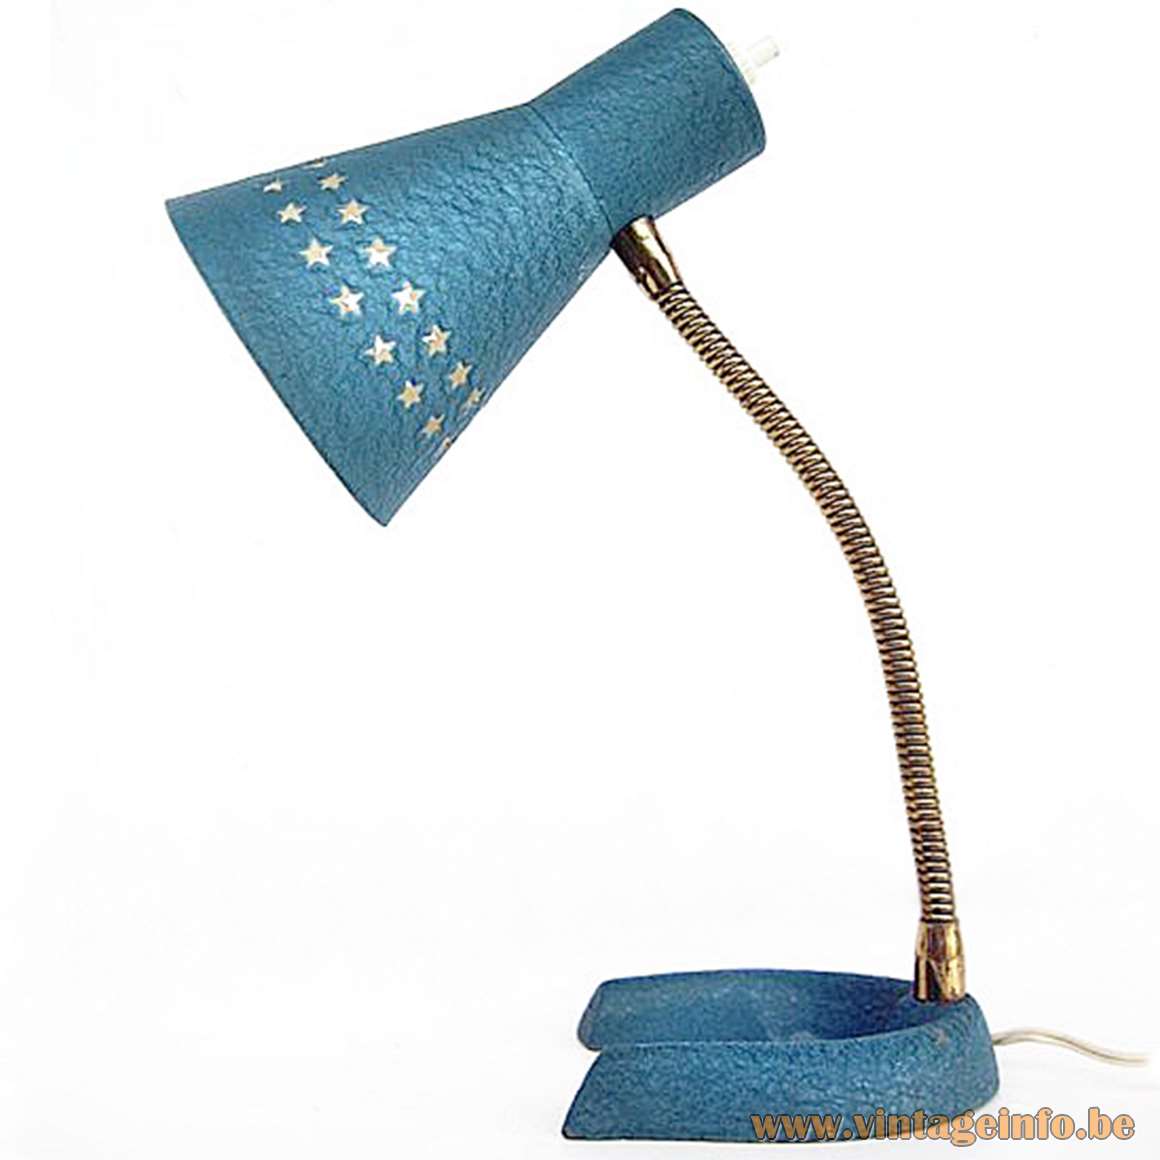 Horseshoe Perforated Stars Desk Lamp - Blue hammered metallic paint